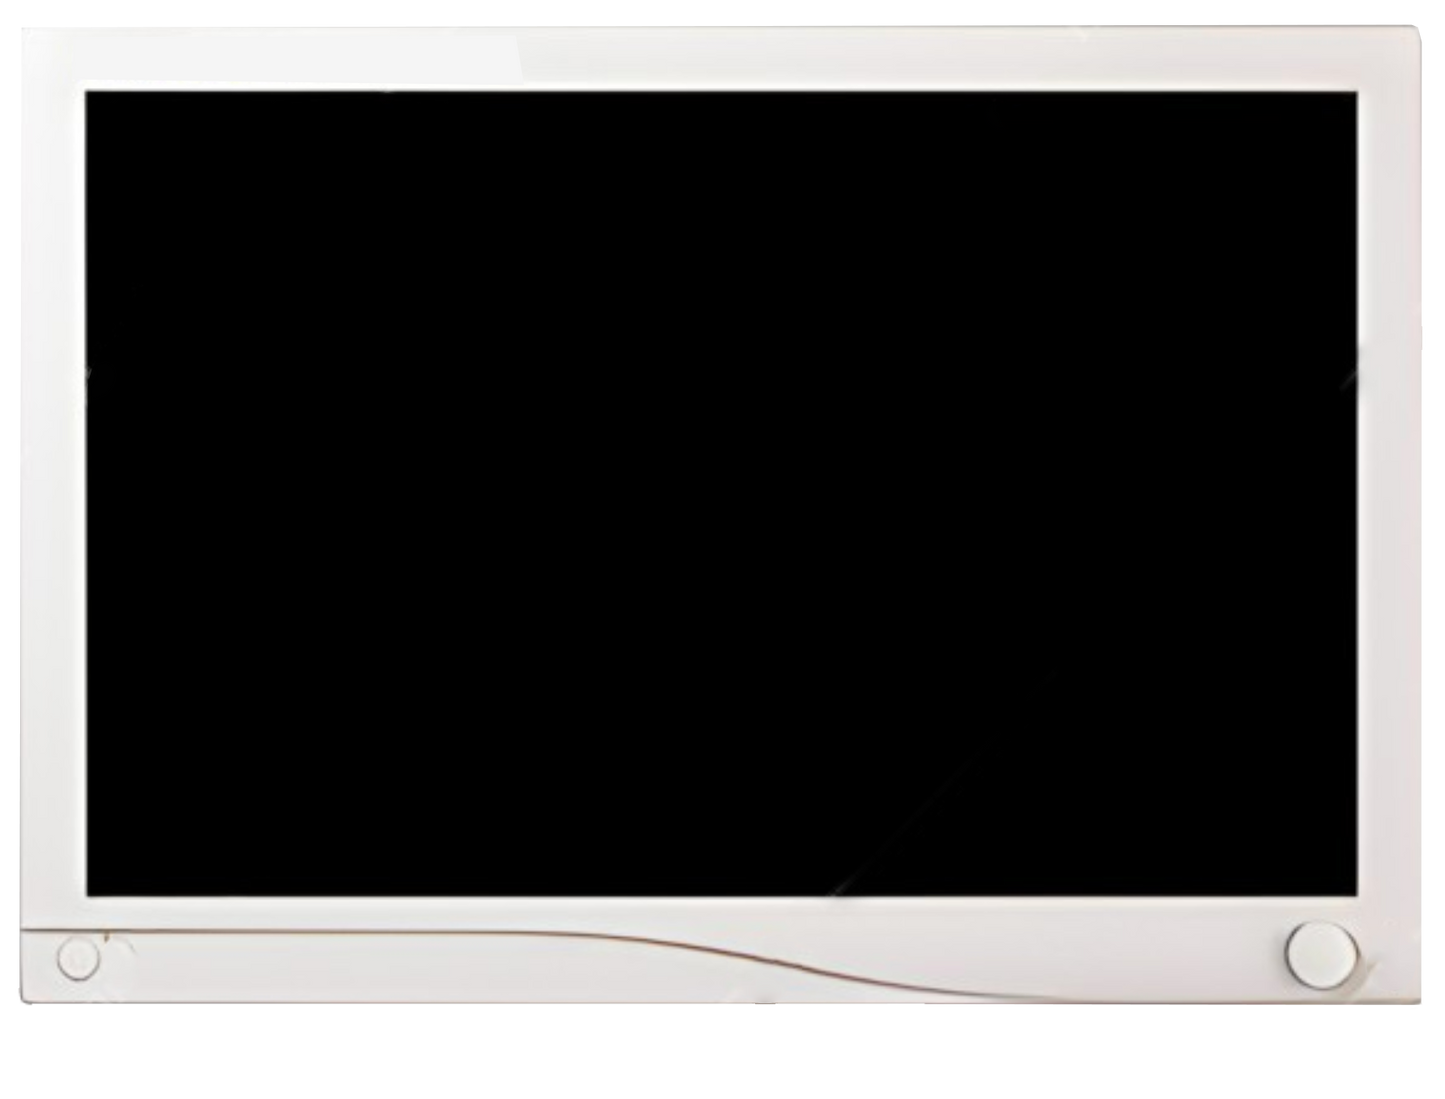 Stryker 26” Vision Elect HDTV Flat Panel Monitor